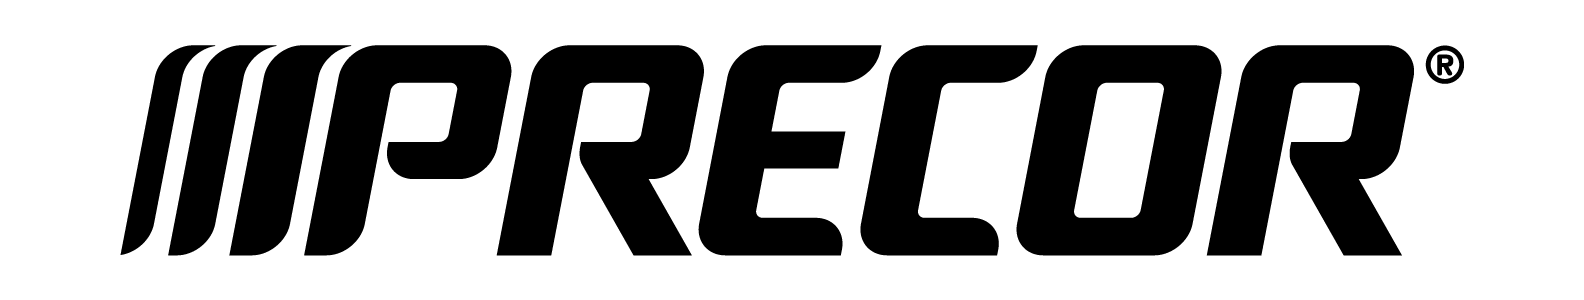 Precor-Logo-Black